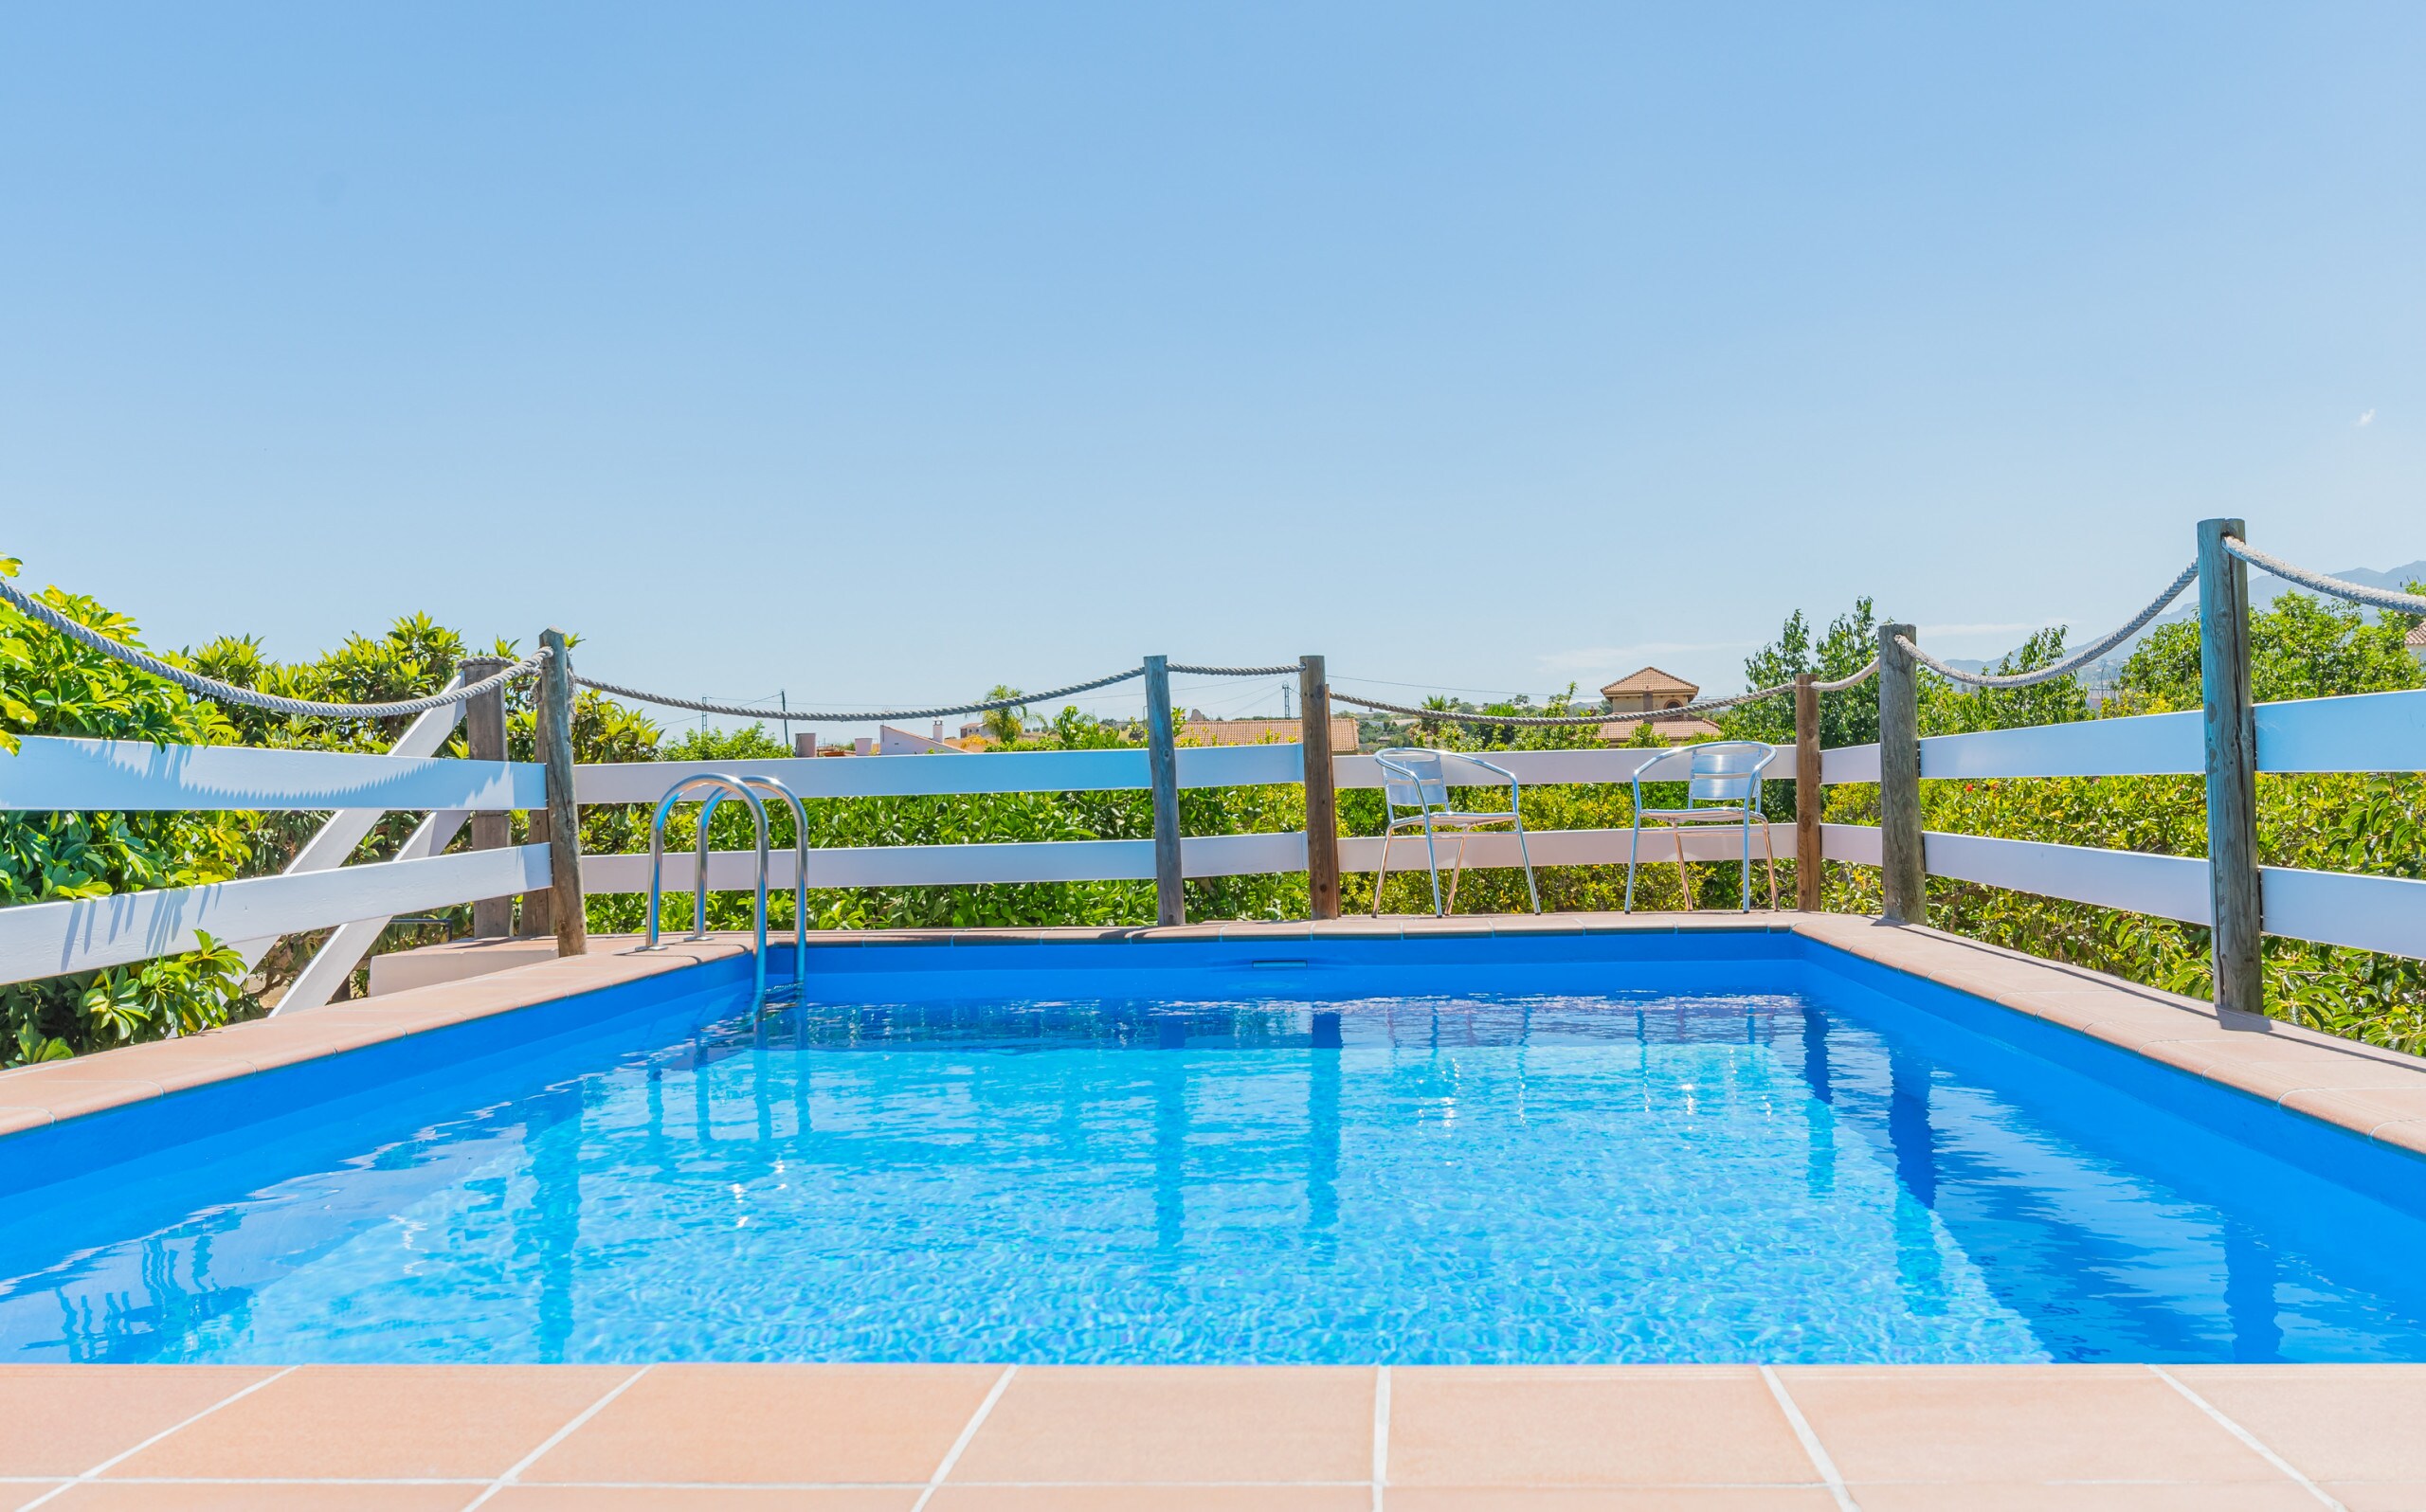 Enjoy the private pool of this Finca in Alhaurín el Grande